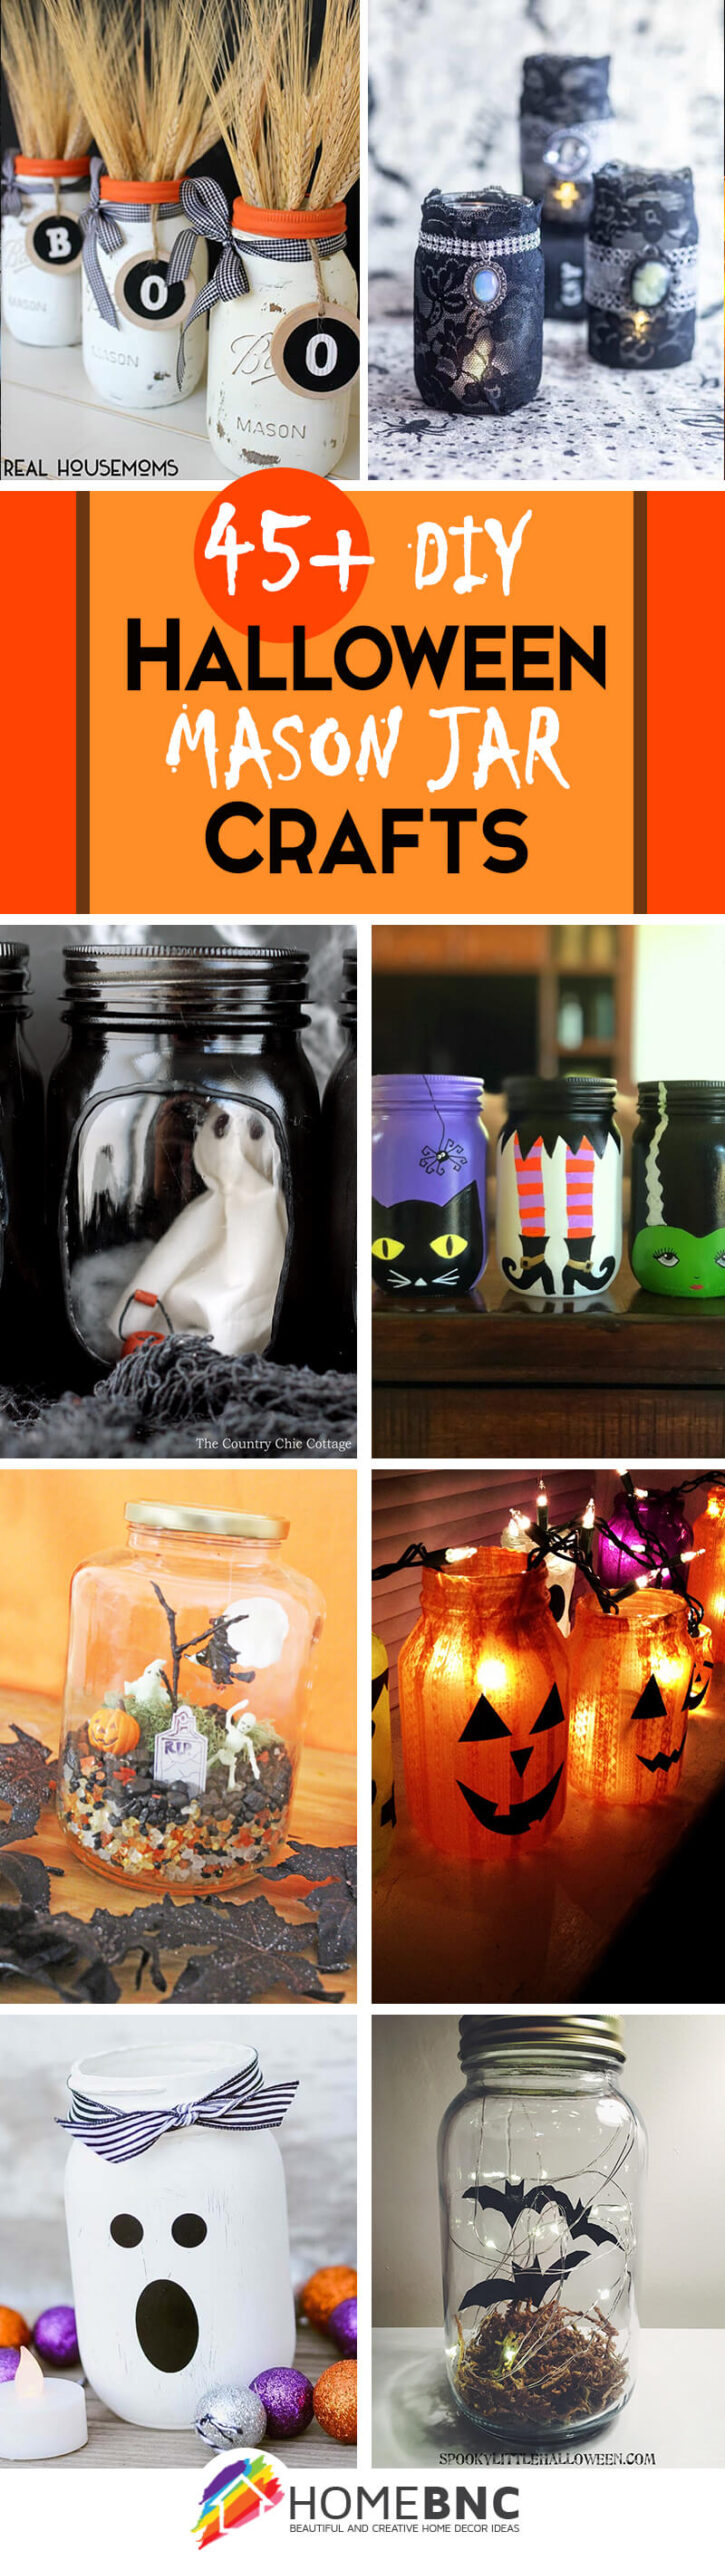 DIY Mason Jar Halloween Craft Ideas